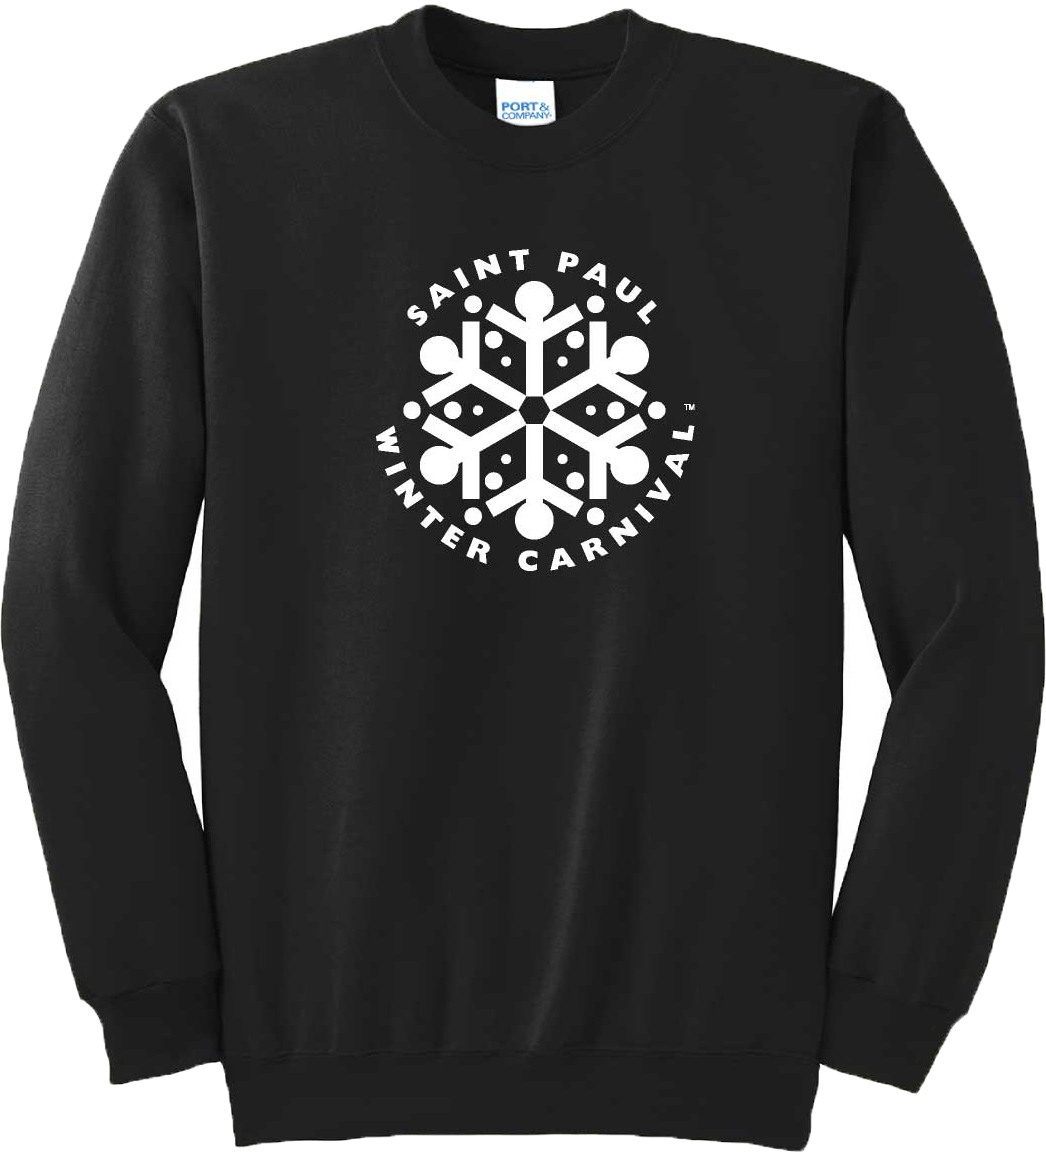 Black crewneck sweatshirt with logo - Saint Paul Winter Carnival %